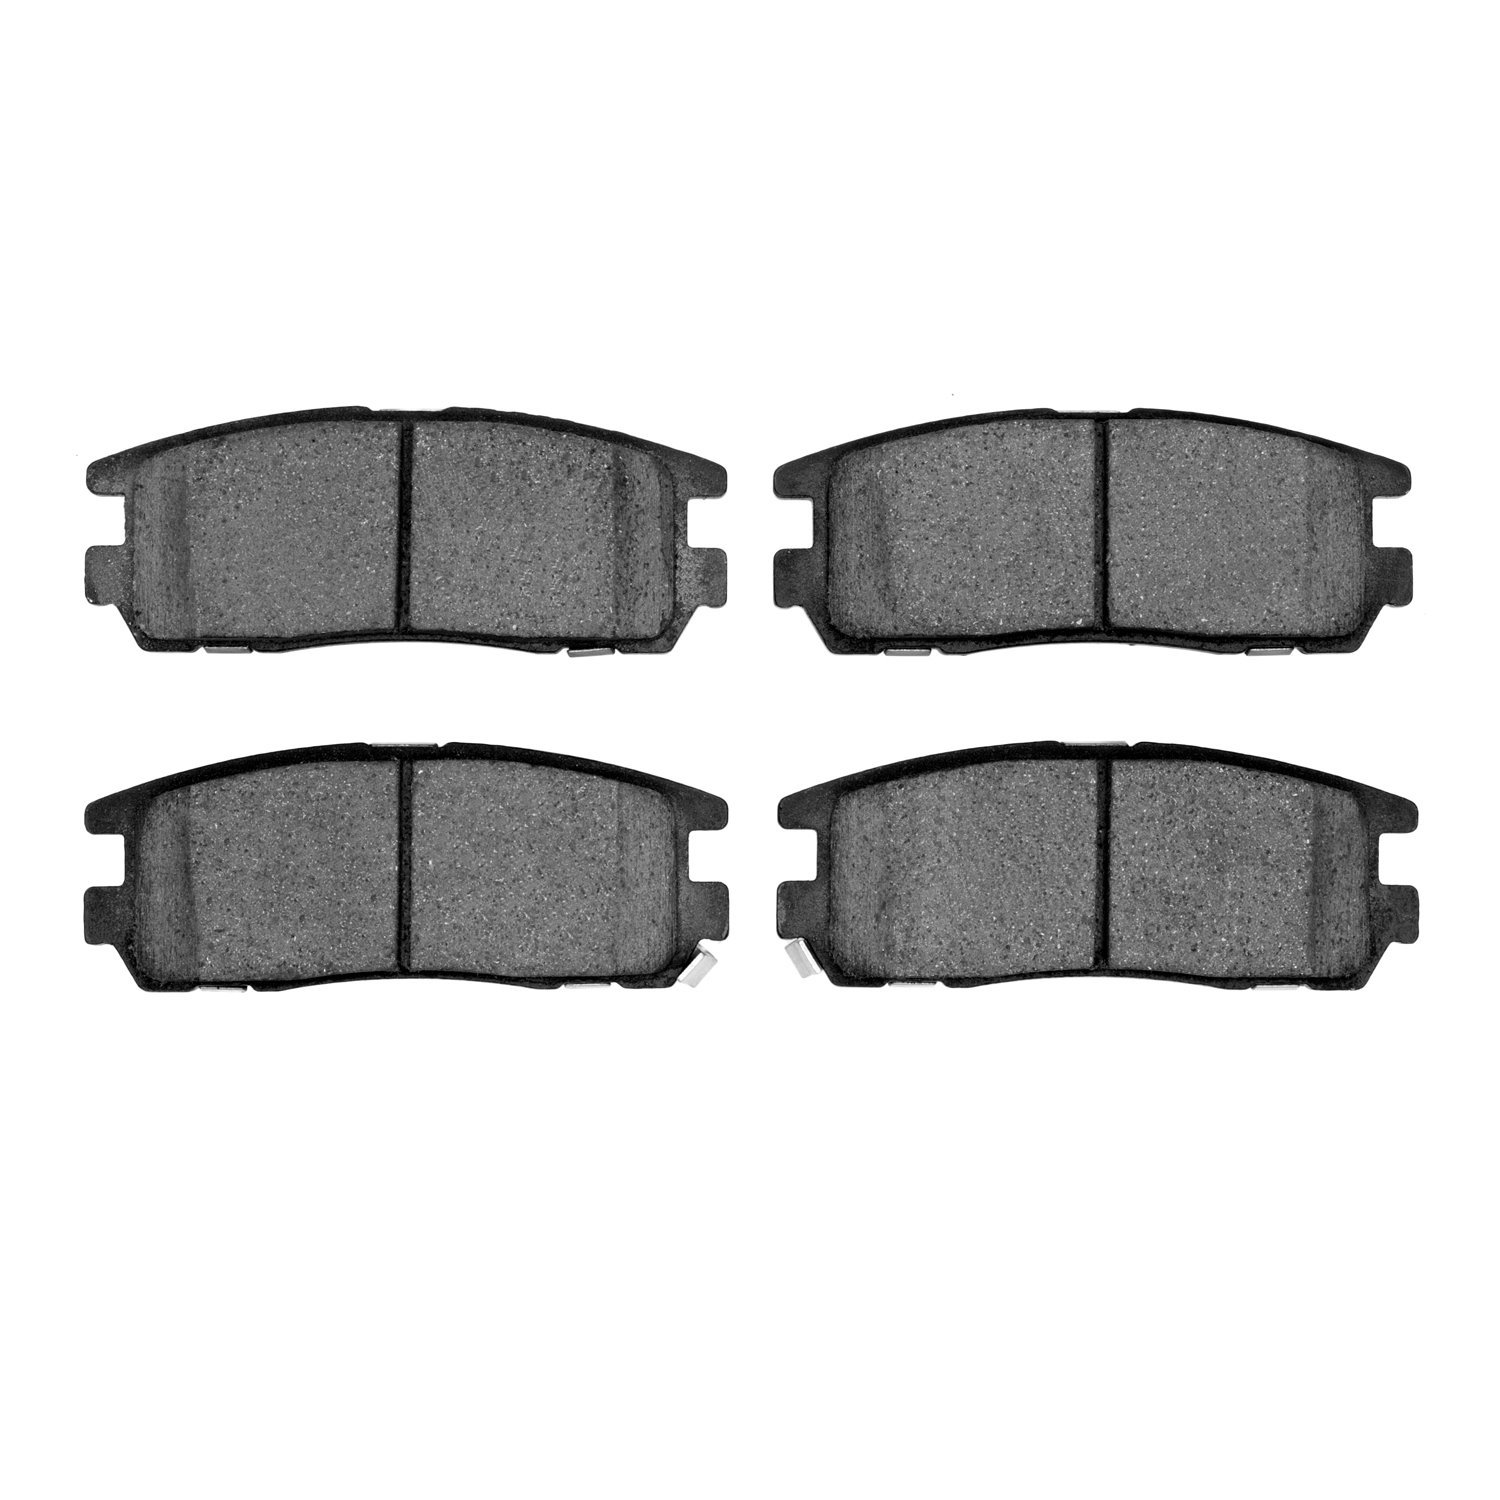 Semi-Metallic Brake Pads, 1992-2004 Fits Multiple Makes/Models, Position: Rear